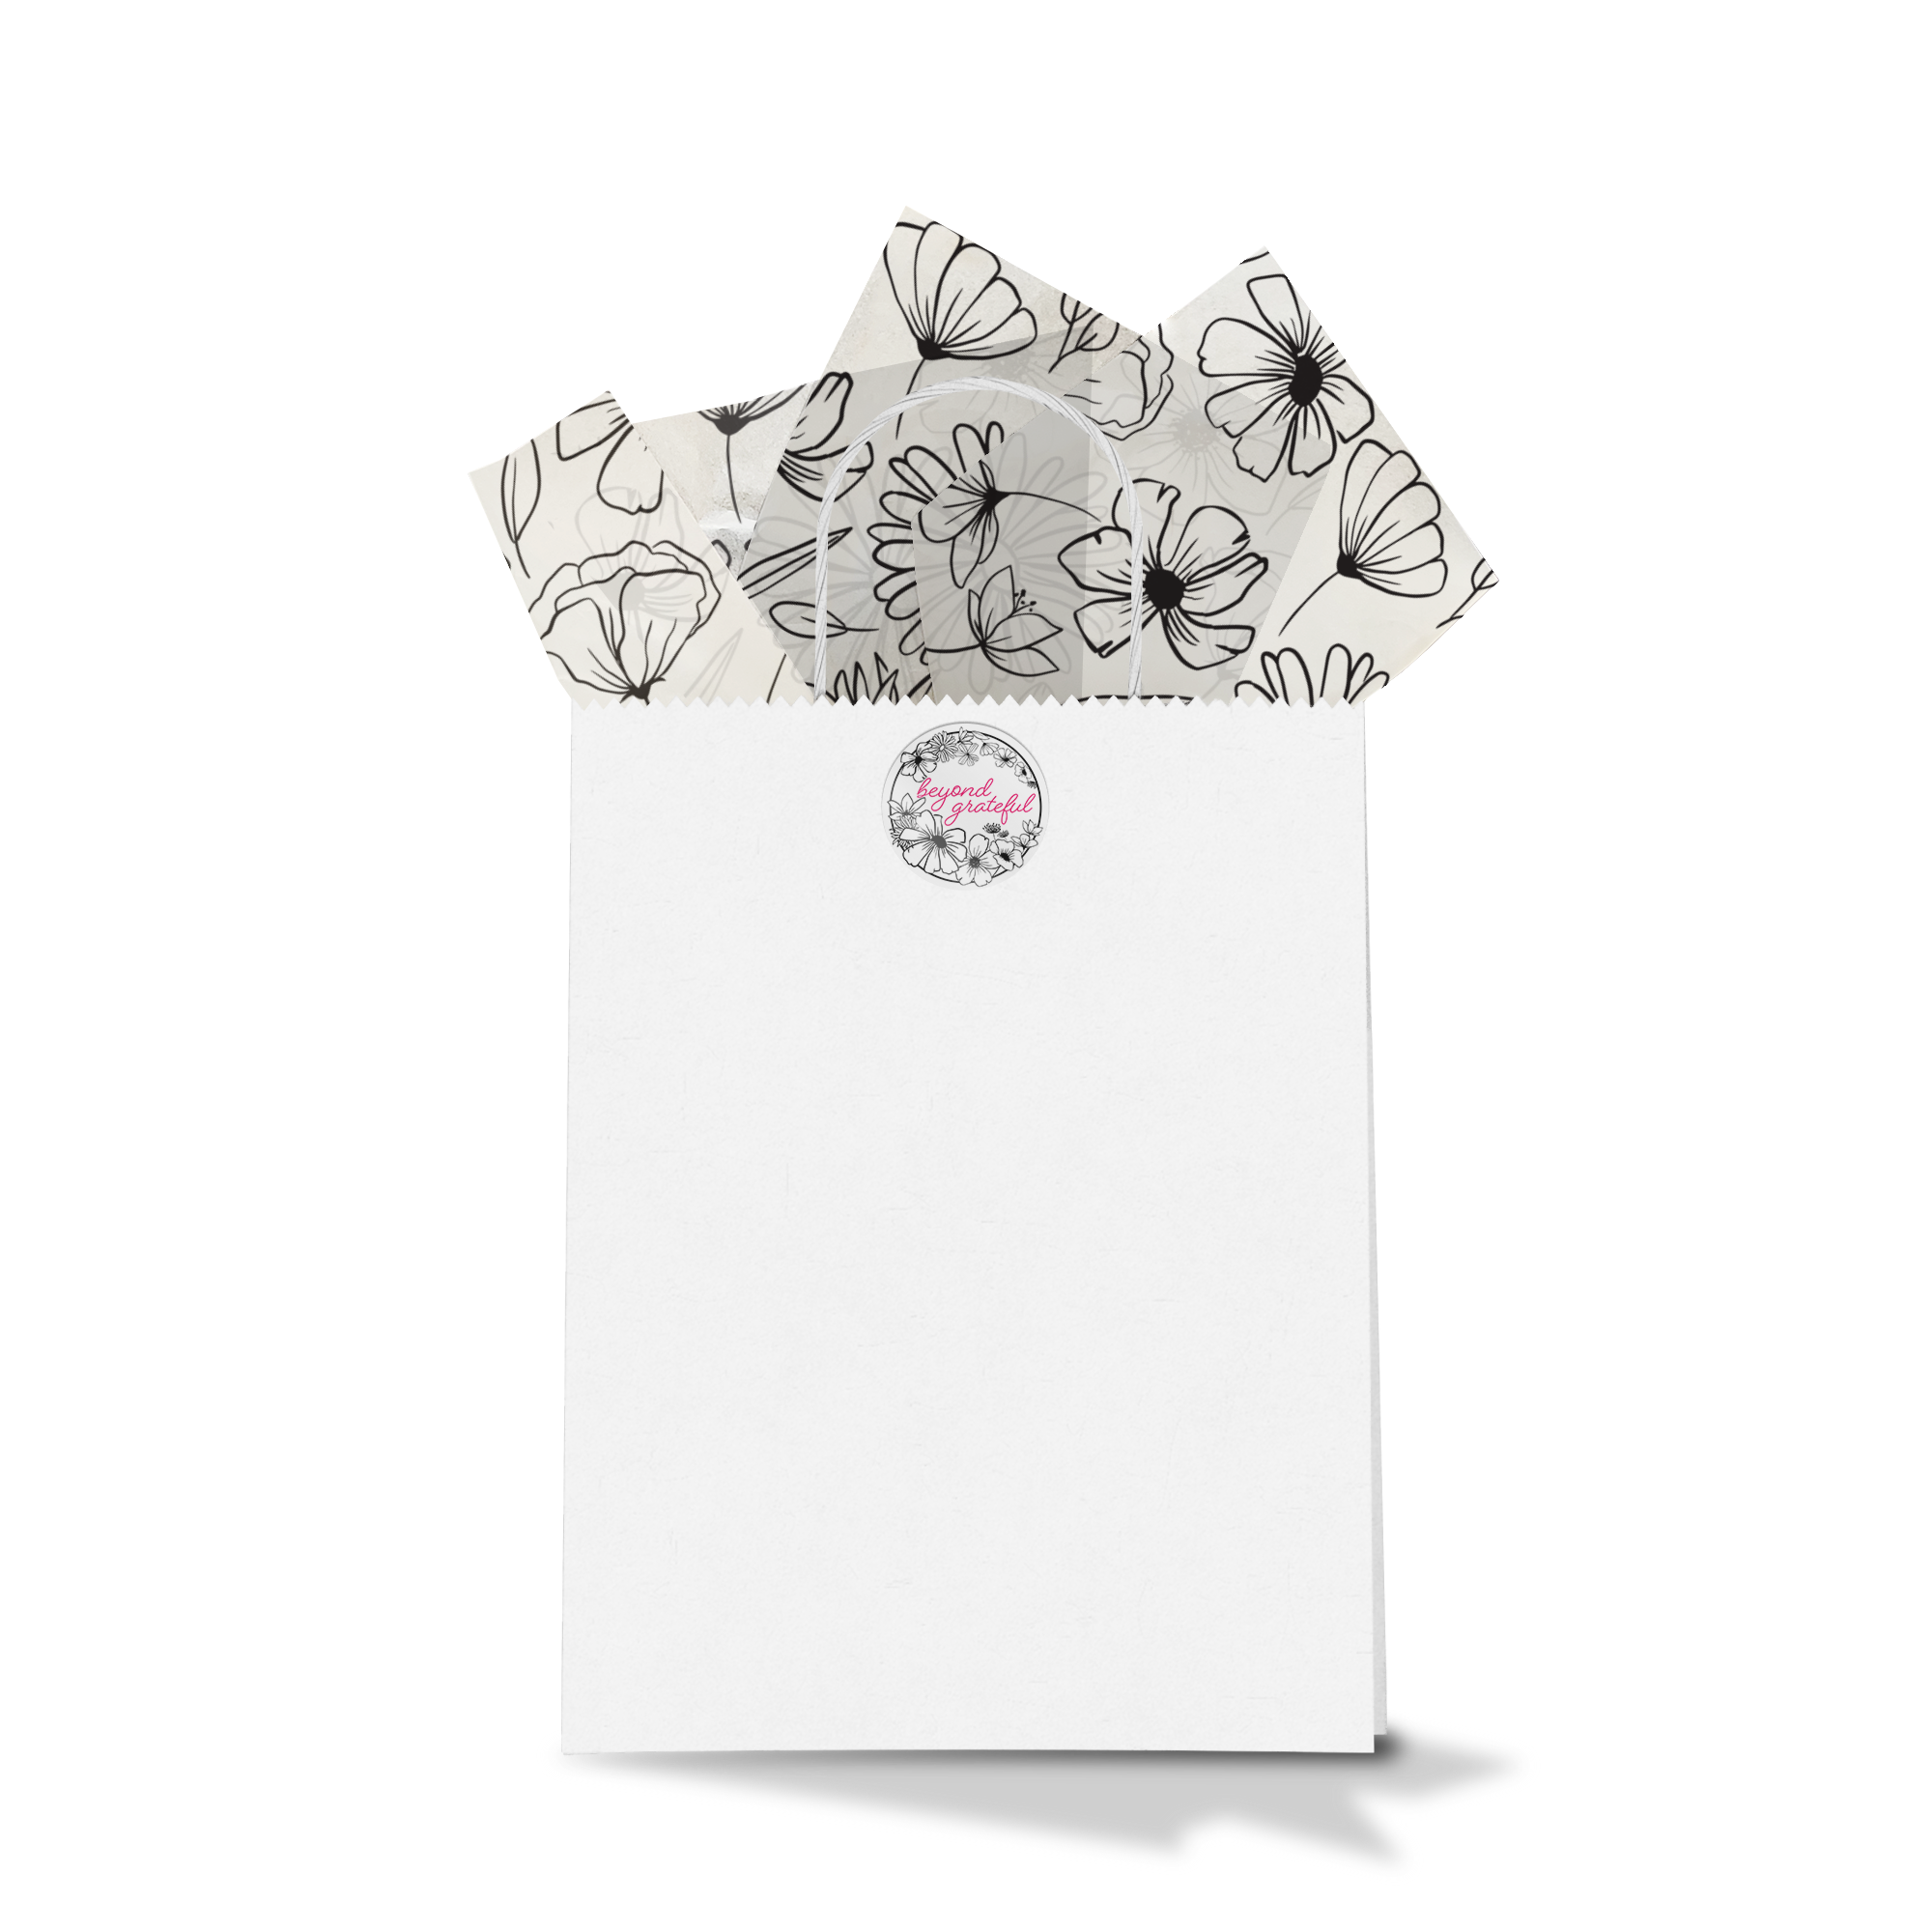 Black and White Floral Designer Tissue Paper for Gift Bags